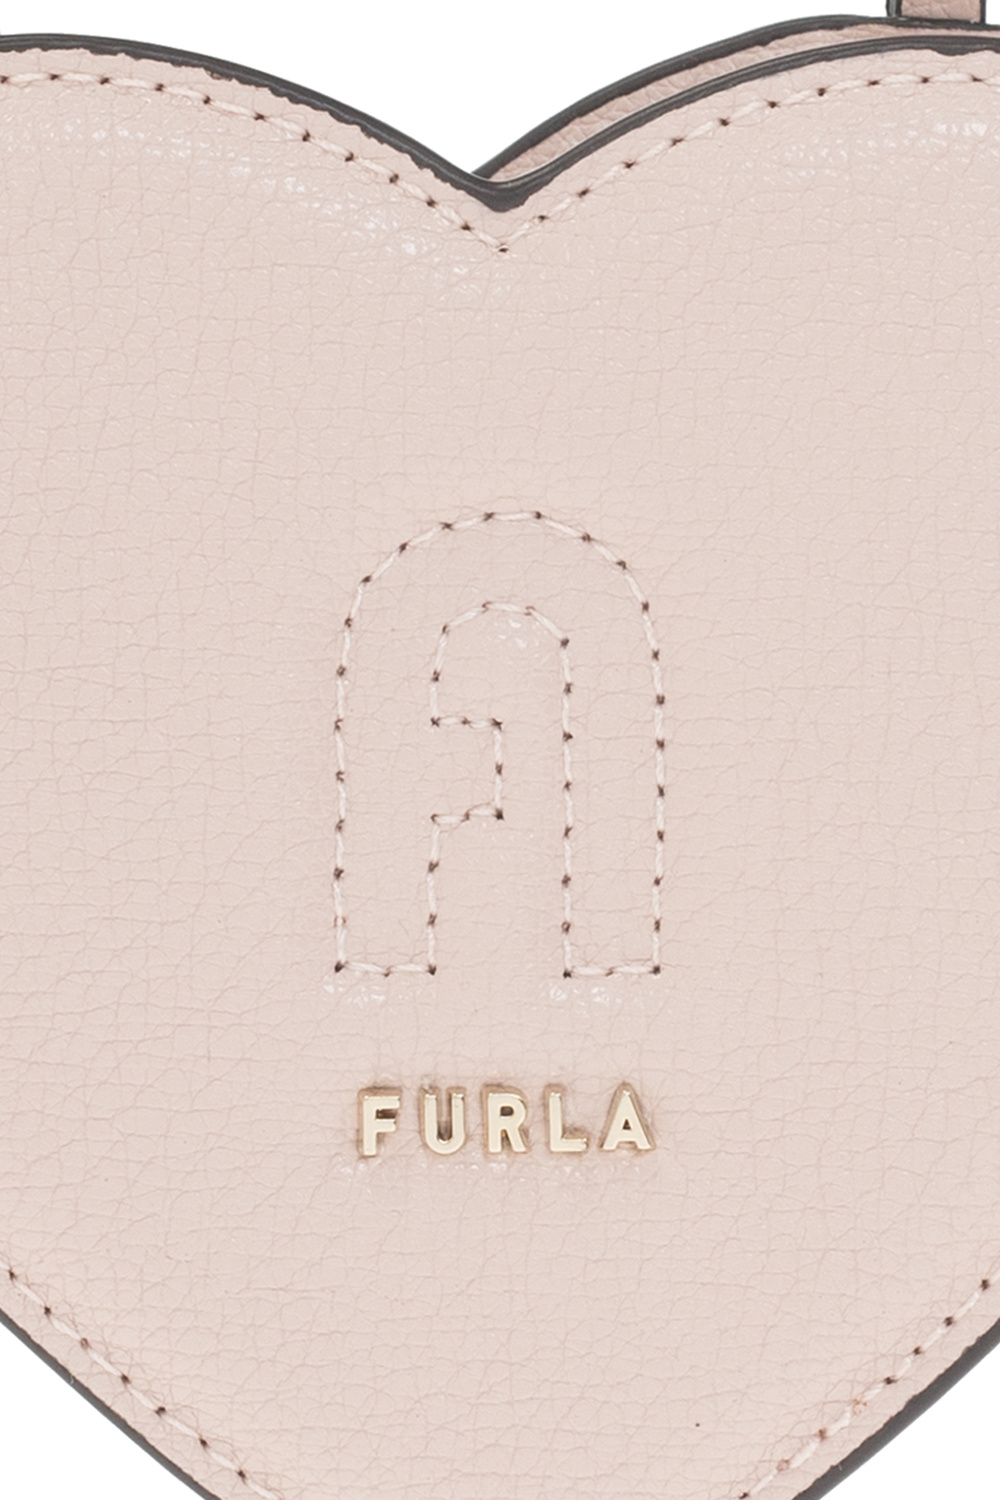 Furla ‘Lovely S’ pouch